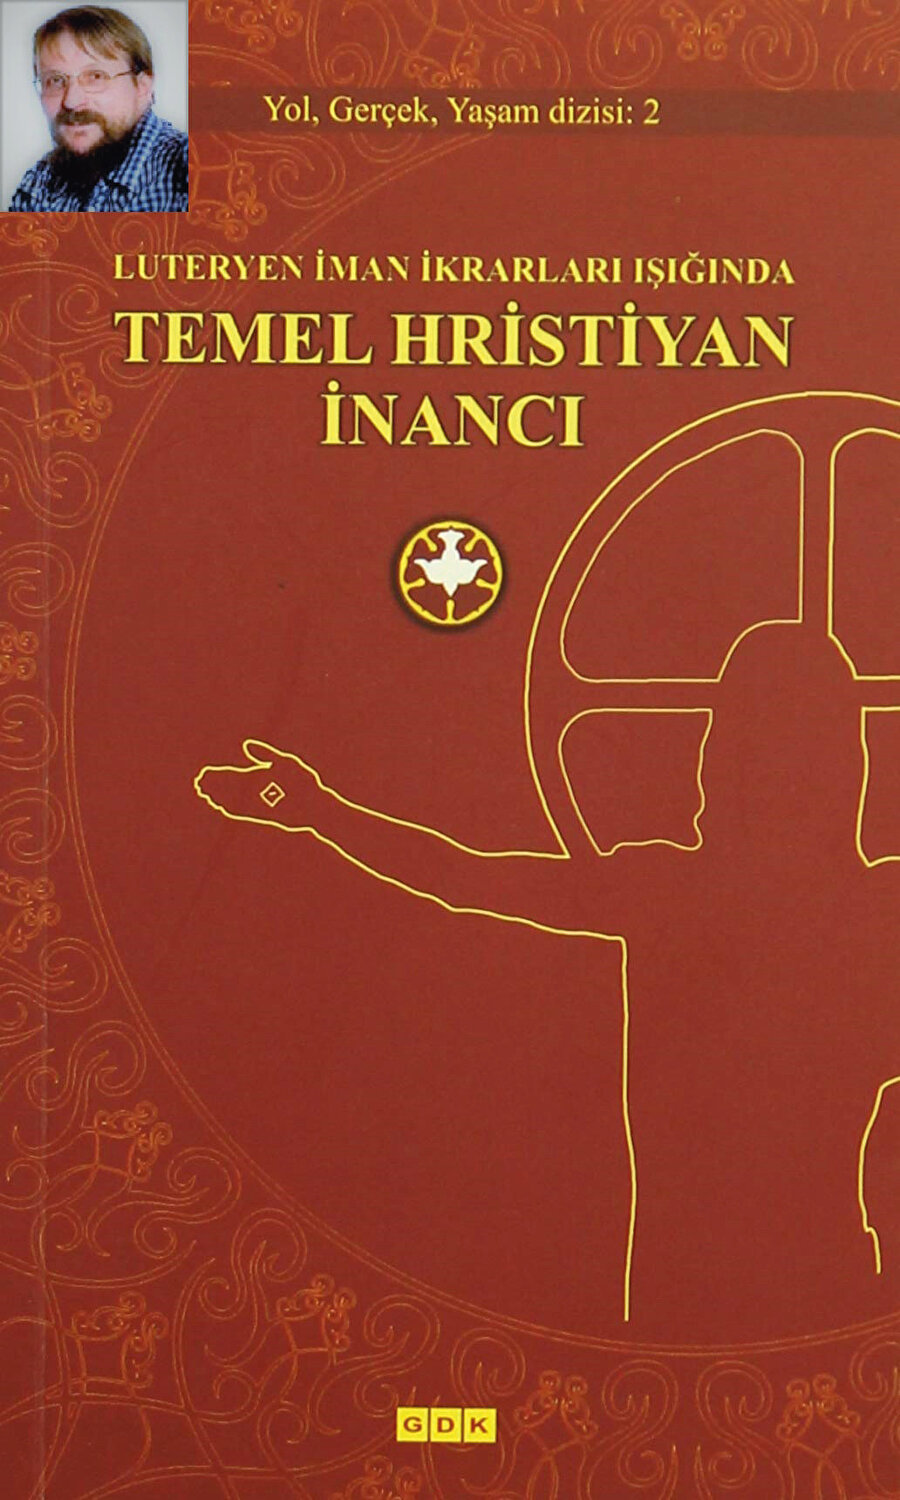 Finlandiyalı misyonerin Türkçe yayınlarından biri.